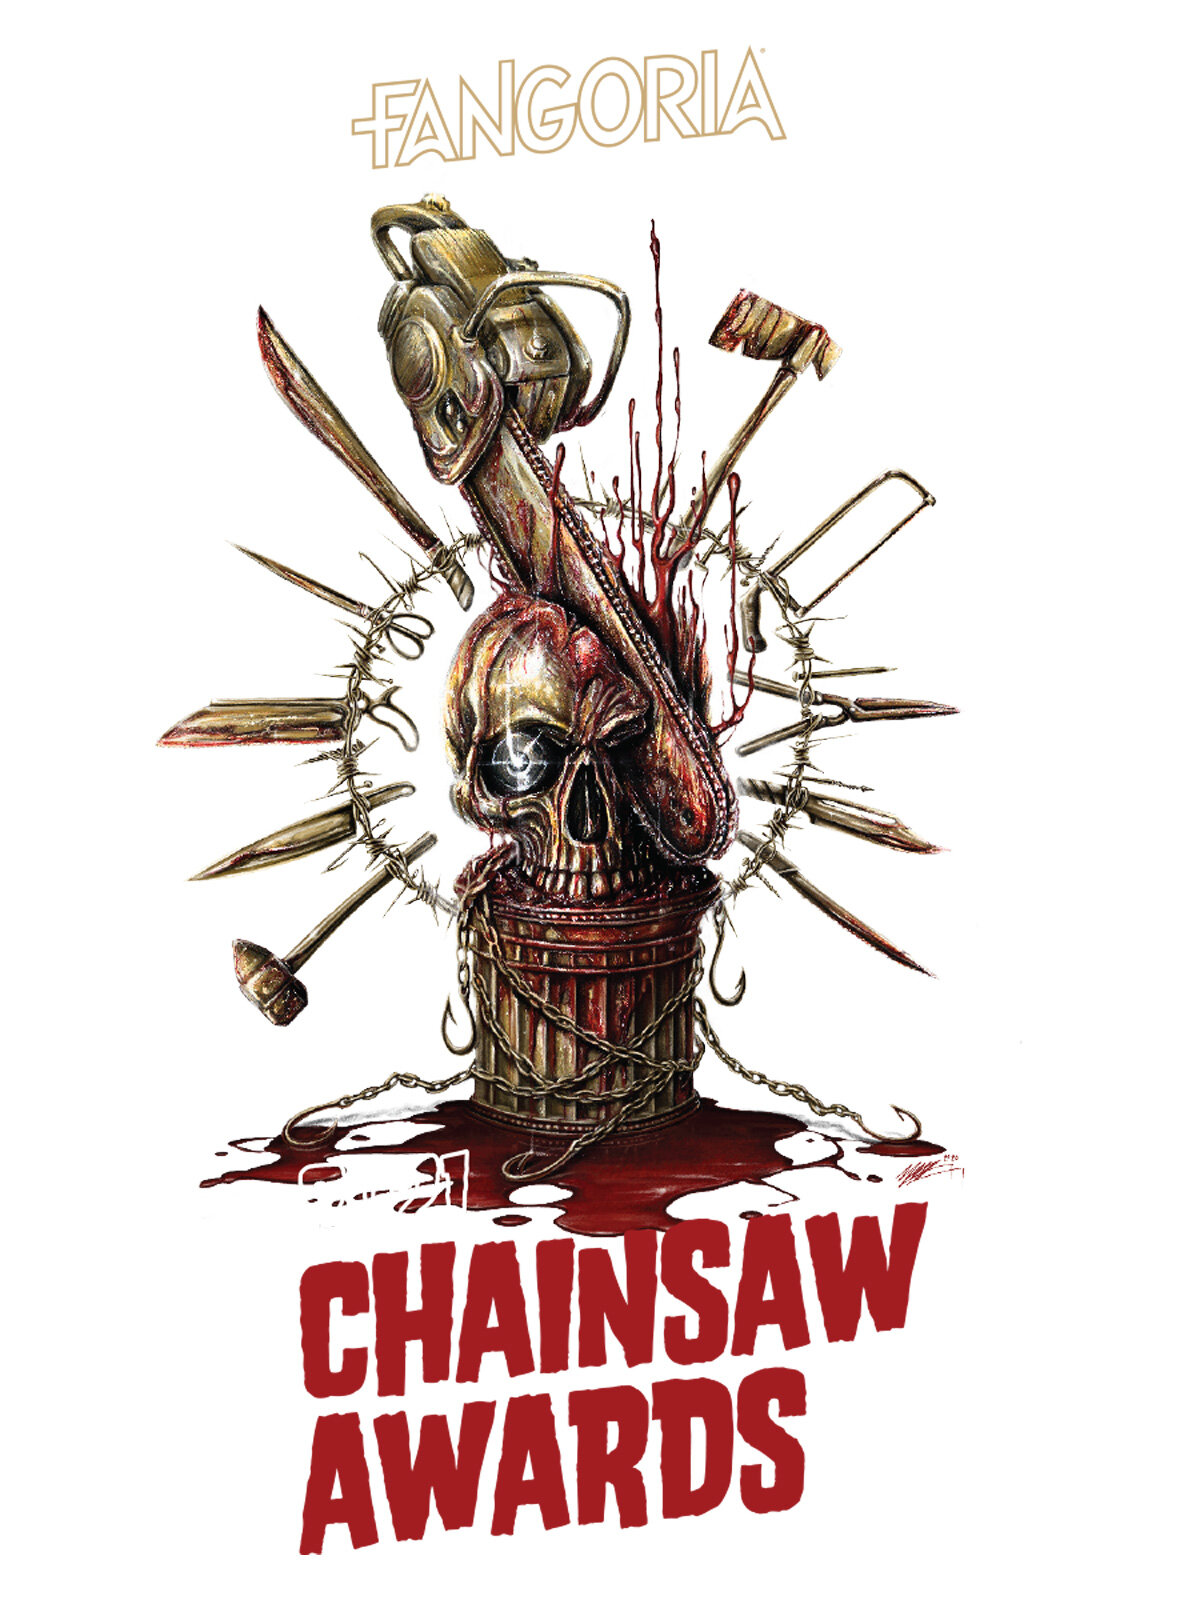 Fangoria Chainsaw Awards Image 1010585 TVmaze